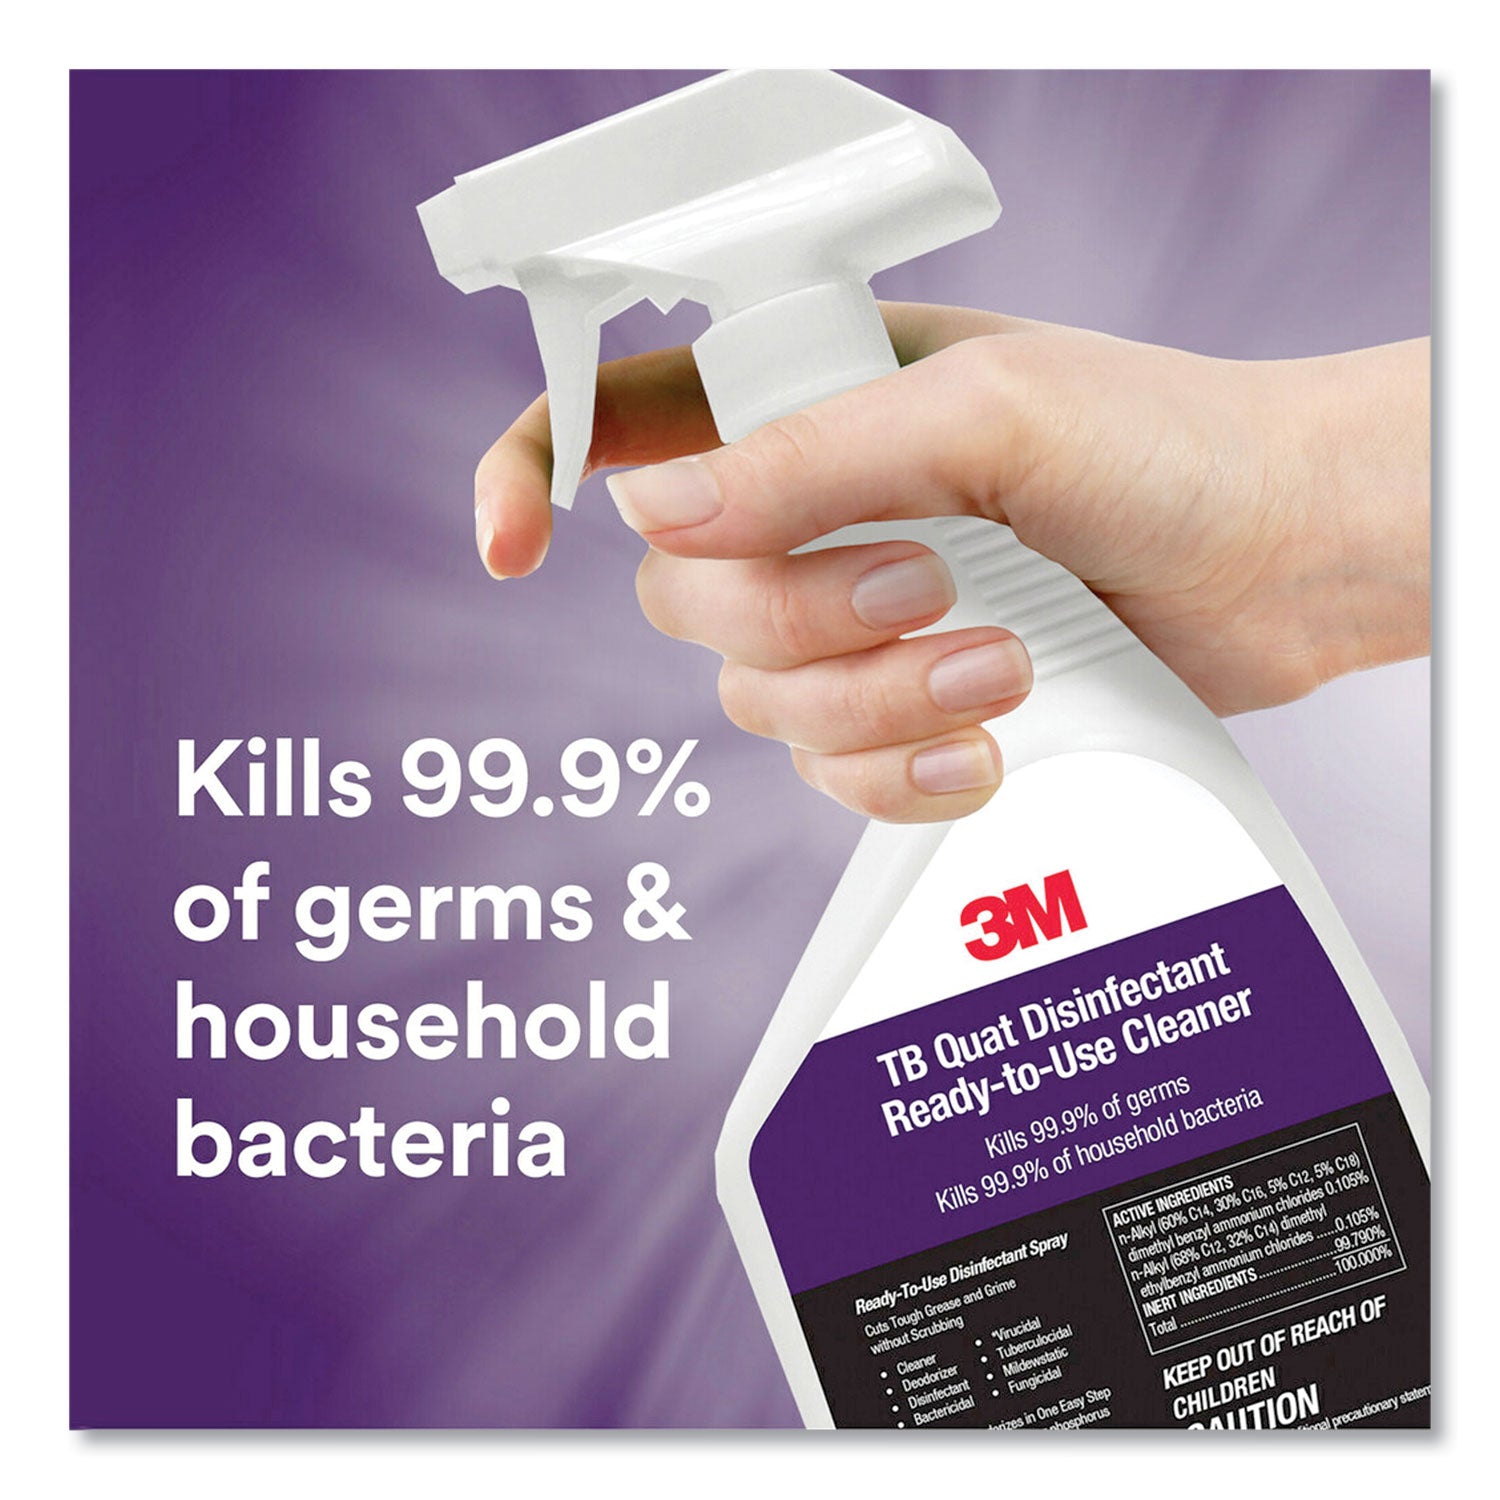 tb-quat-disinfectant-ready-to-use-cleaner-lemon-scent-1-qt-bottle_mmm1027pc - 3